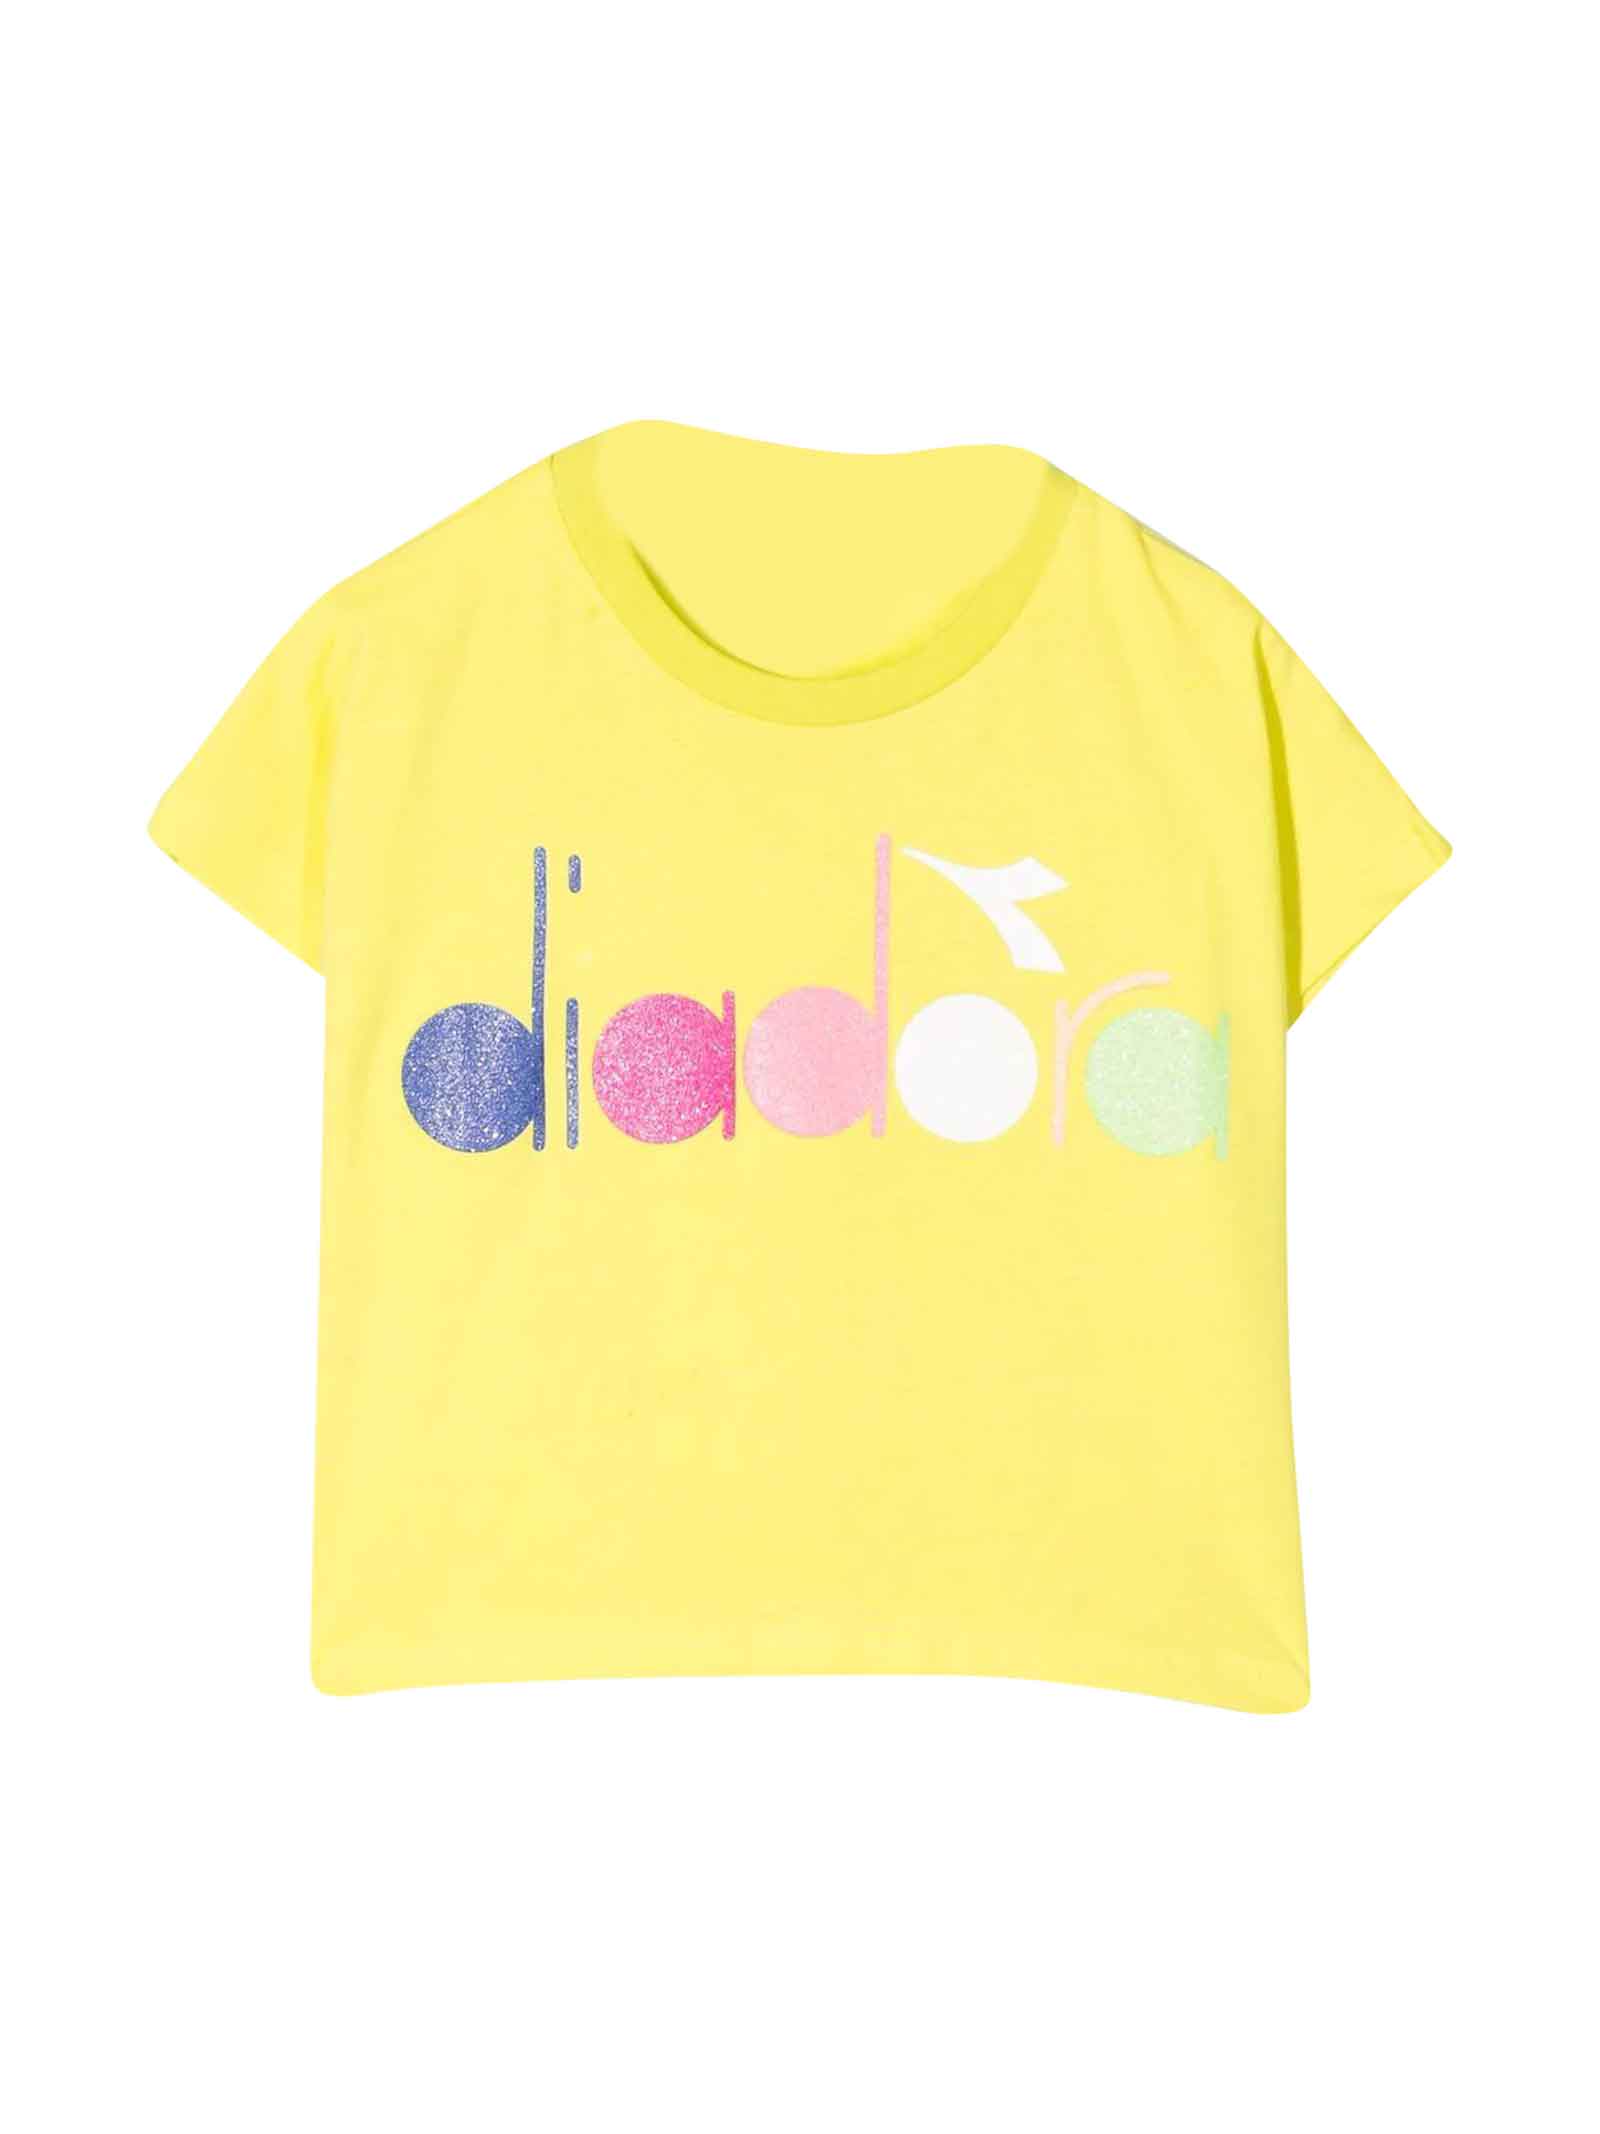 Diadora Lime T-shirt Girl